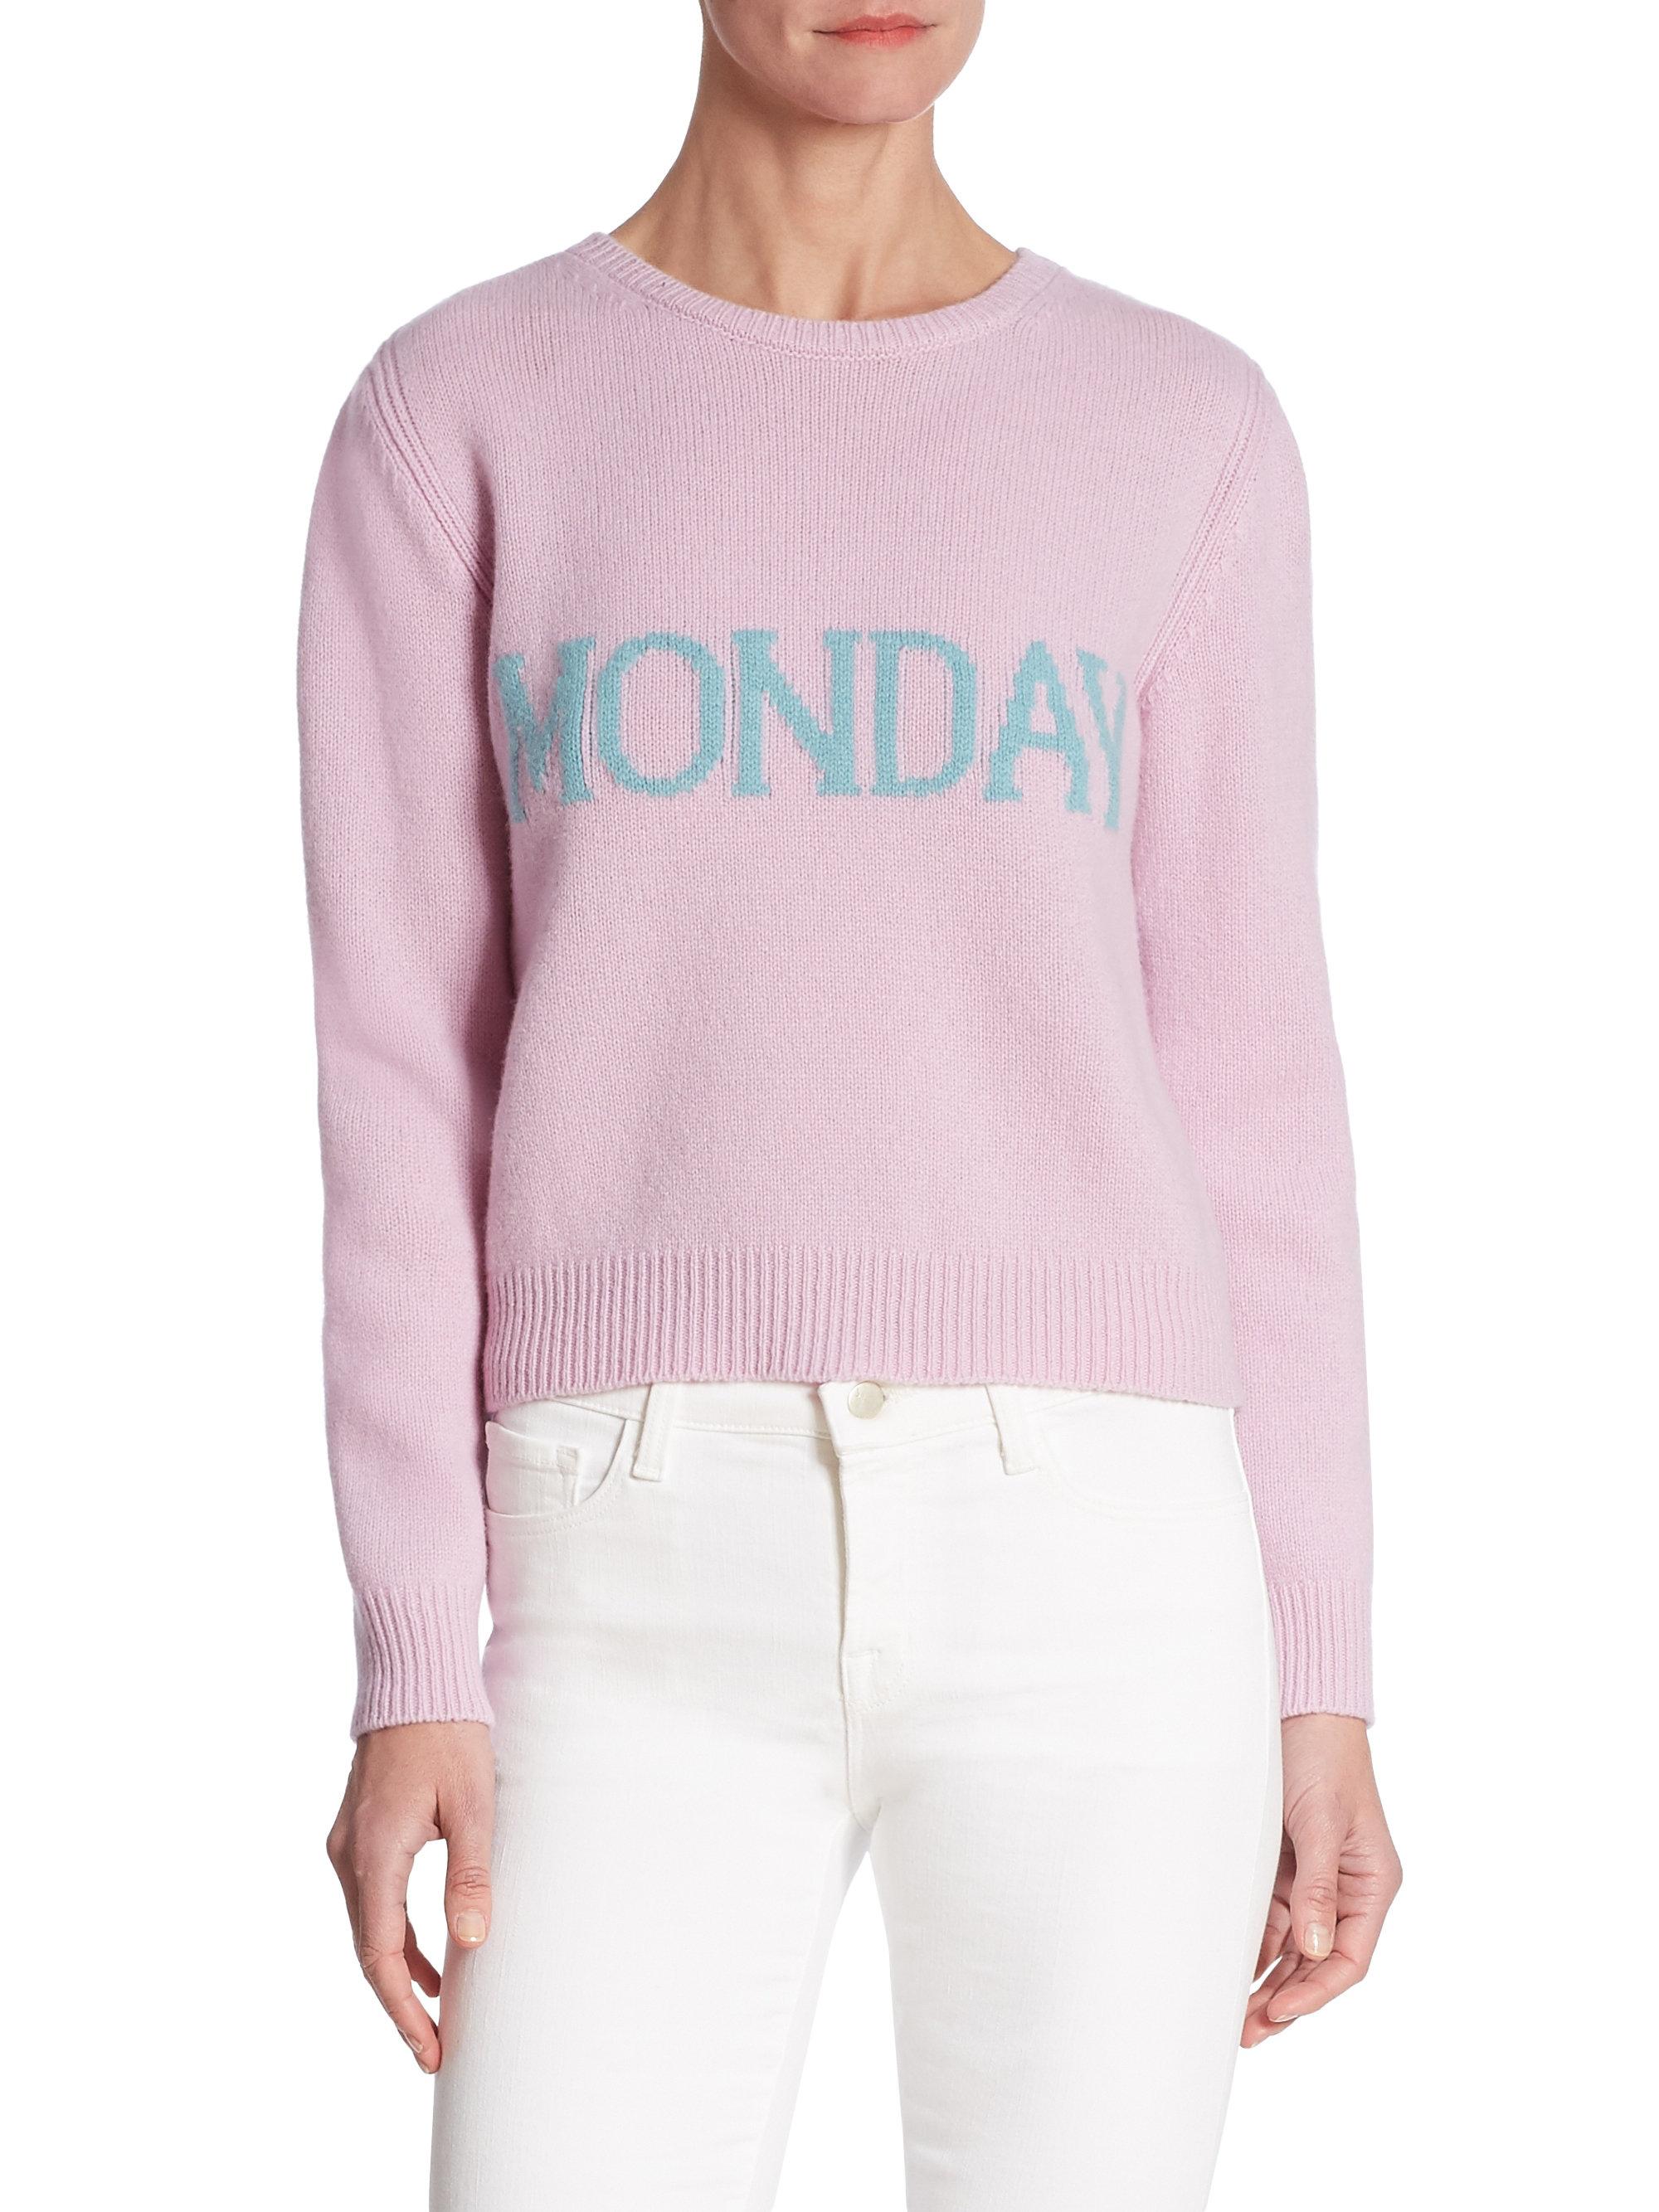 Alberta Ferretti Monday Wool-blend Sweater in Pink - Lyst